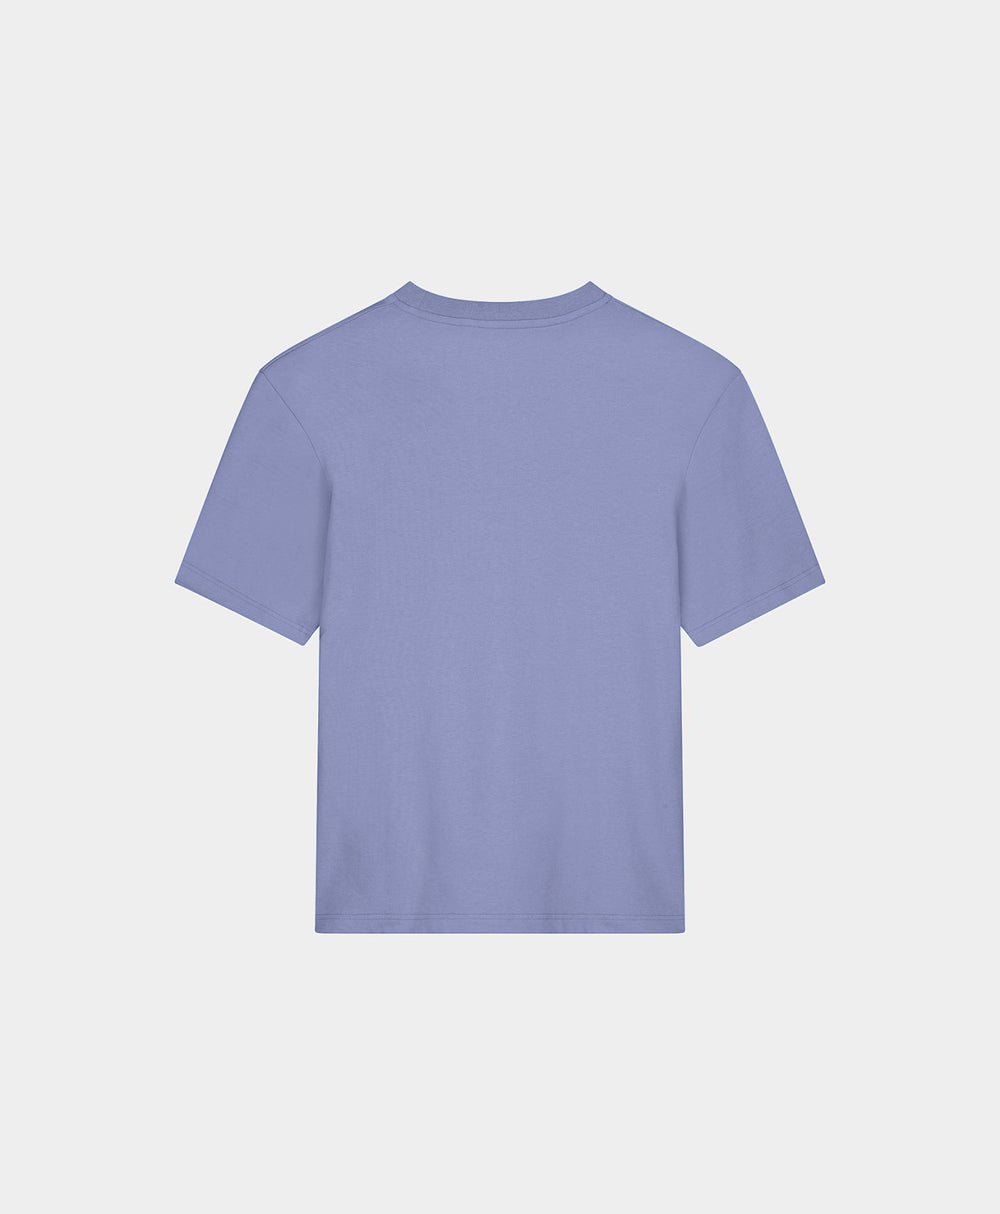 DP - Purple Impression Alias T-Shirt - Packshot - Rear